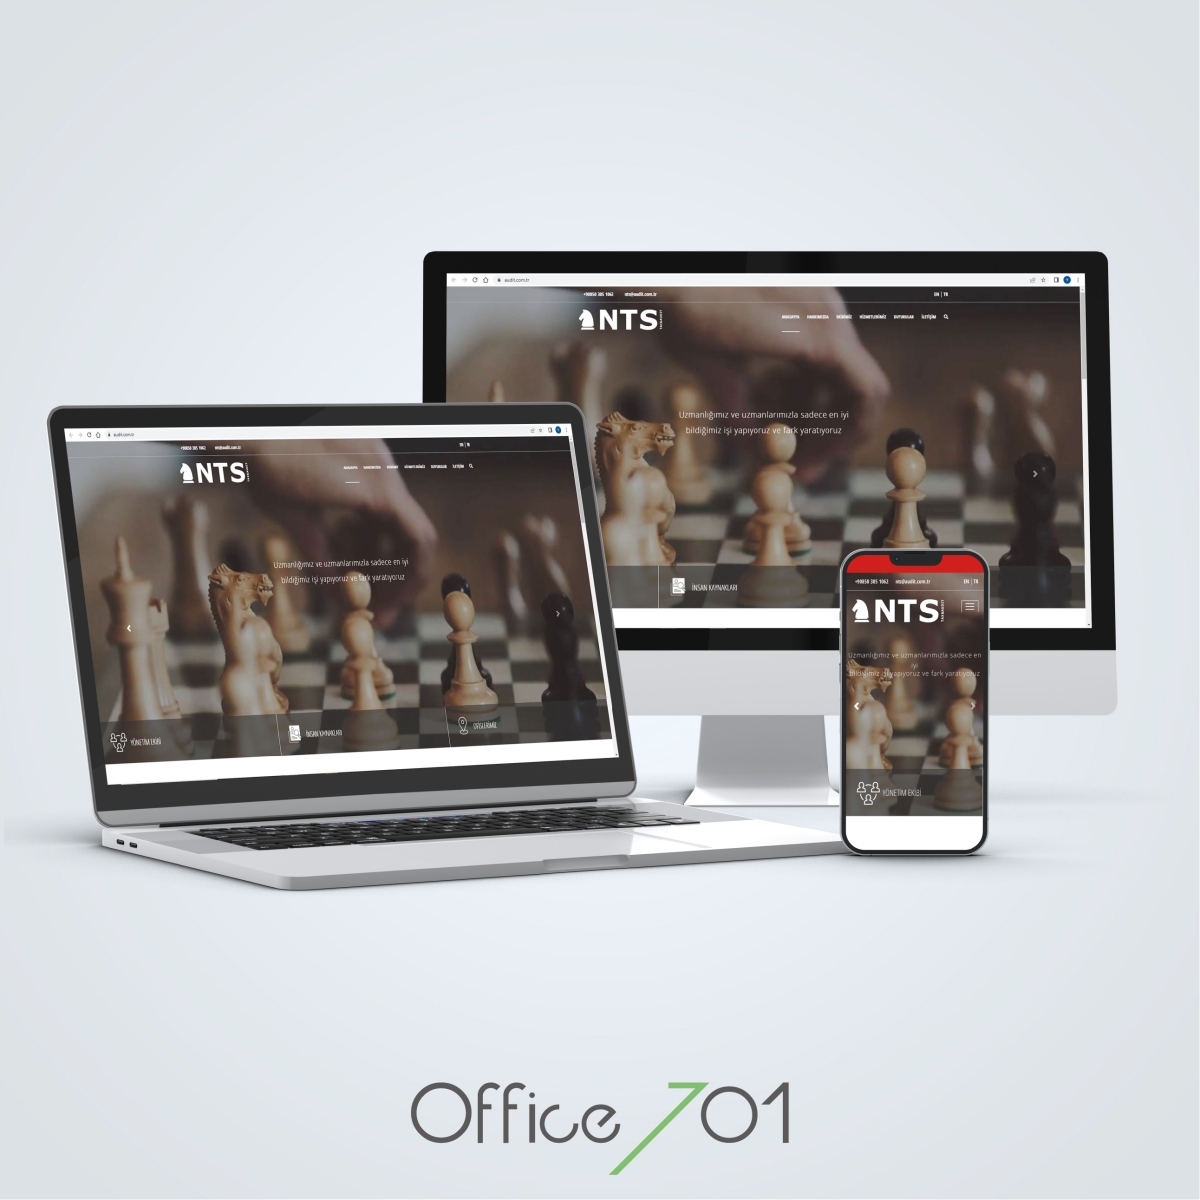 Office701 | Audit (NTS) | Sworn-In Certified Public Accountant Website